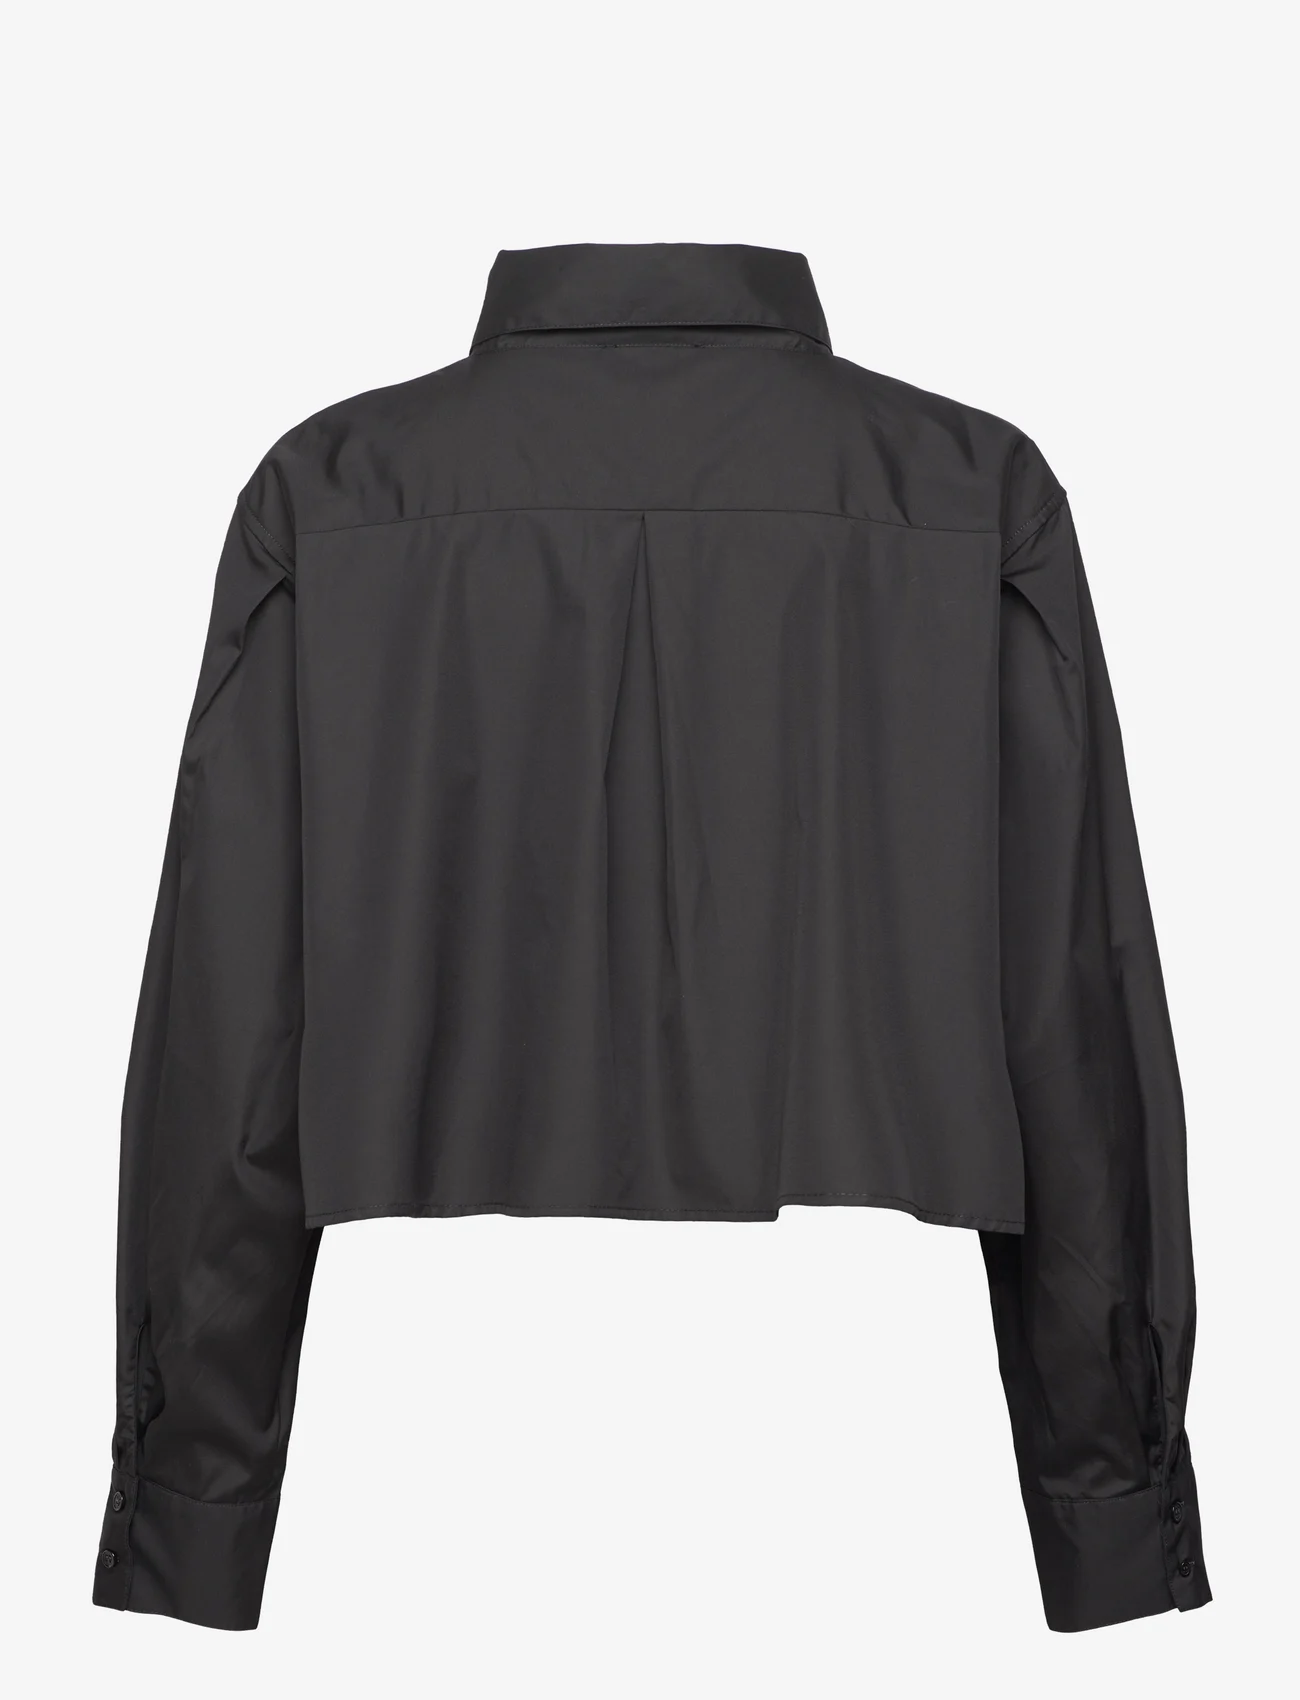 Stylein - JABE SHIRT - langærmede skjorter - black - 1